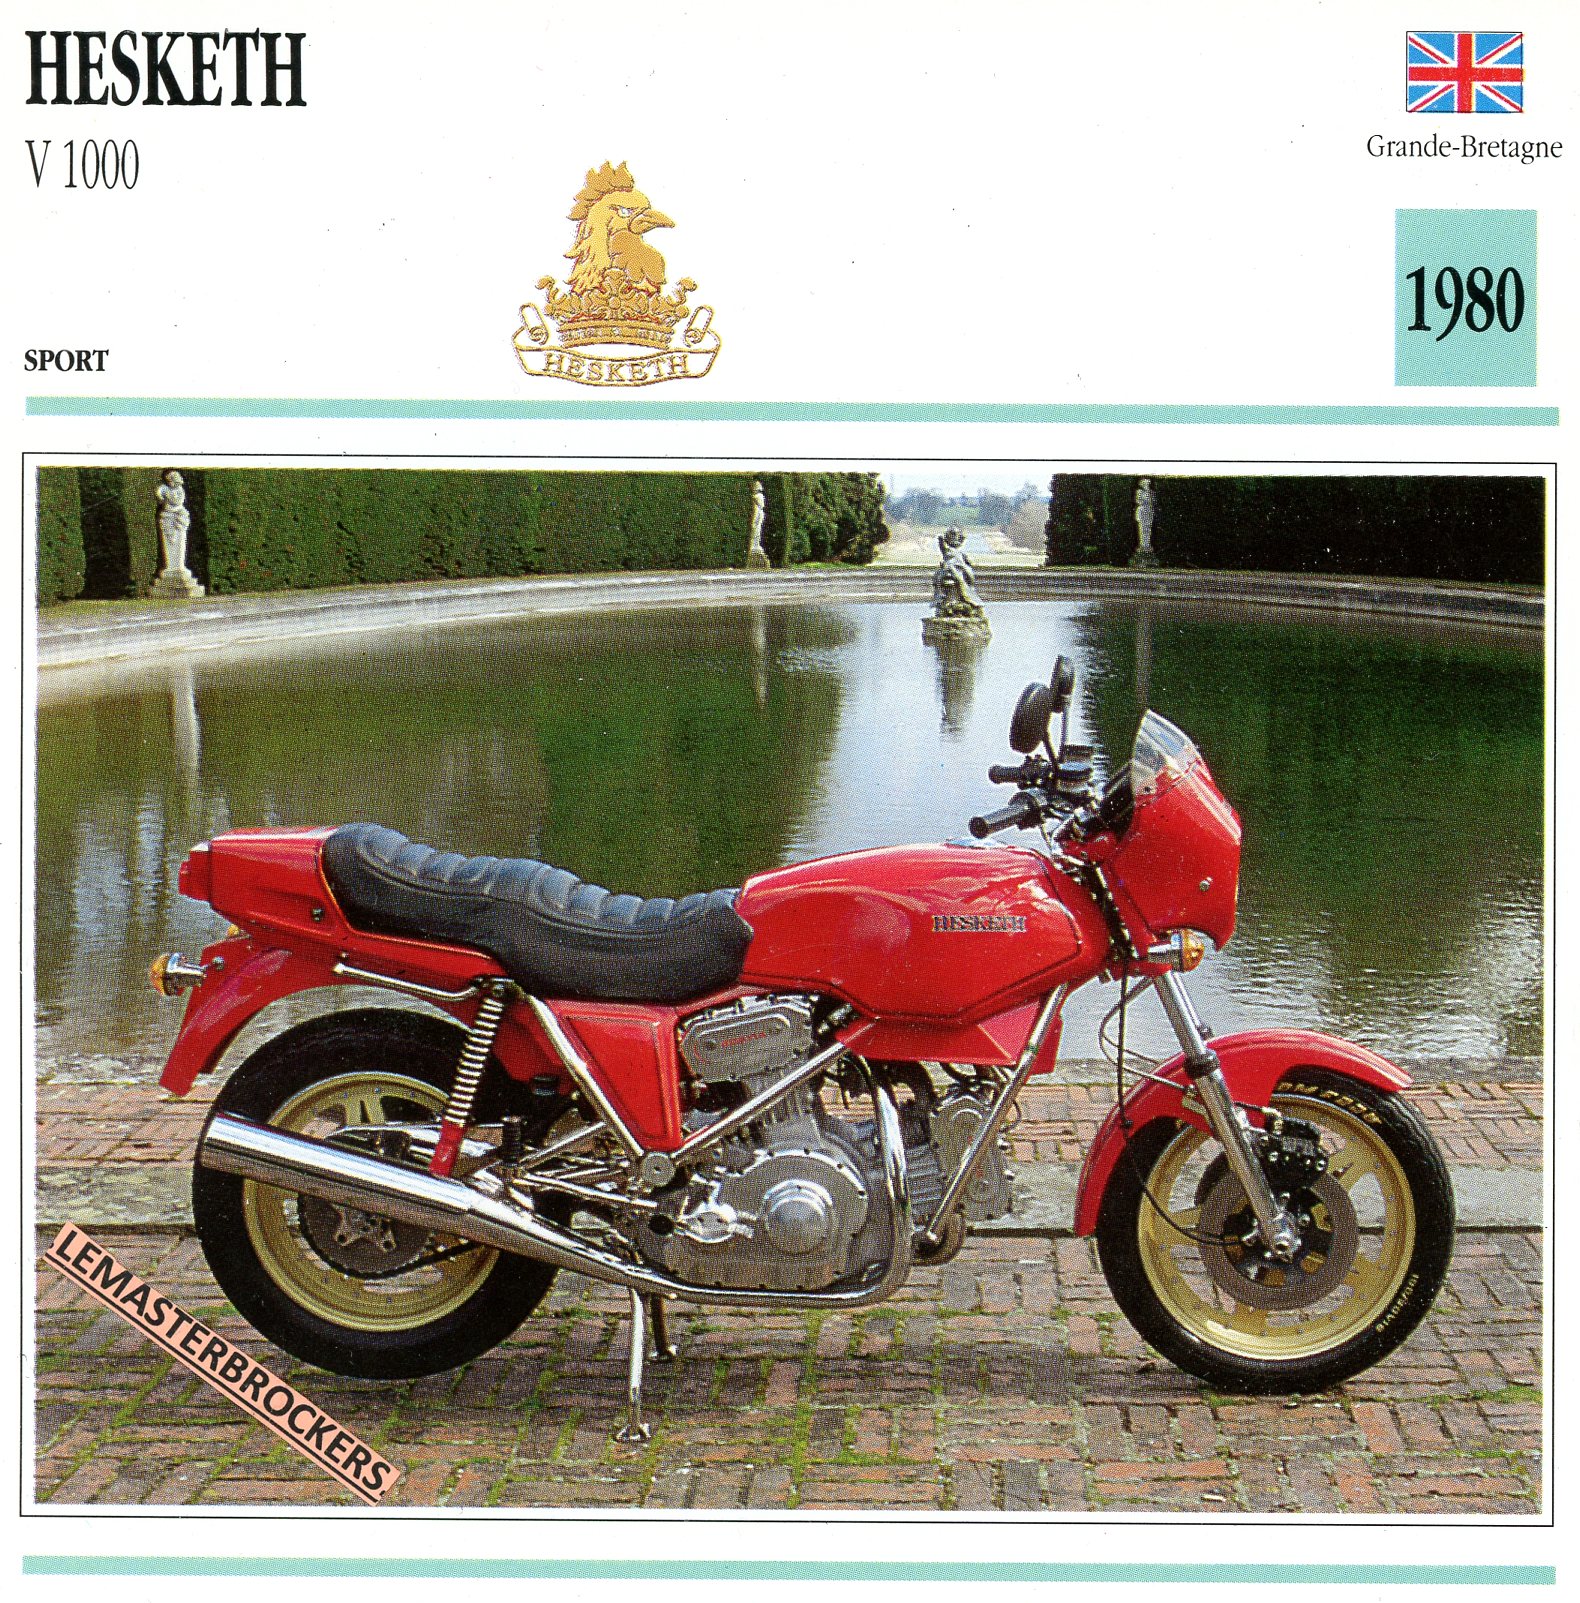 HESKETH-V1000-1980-FICHE-MOTO-LEMASTERBROCKERS